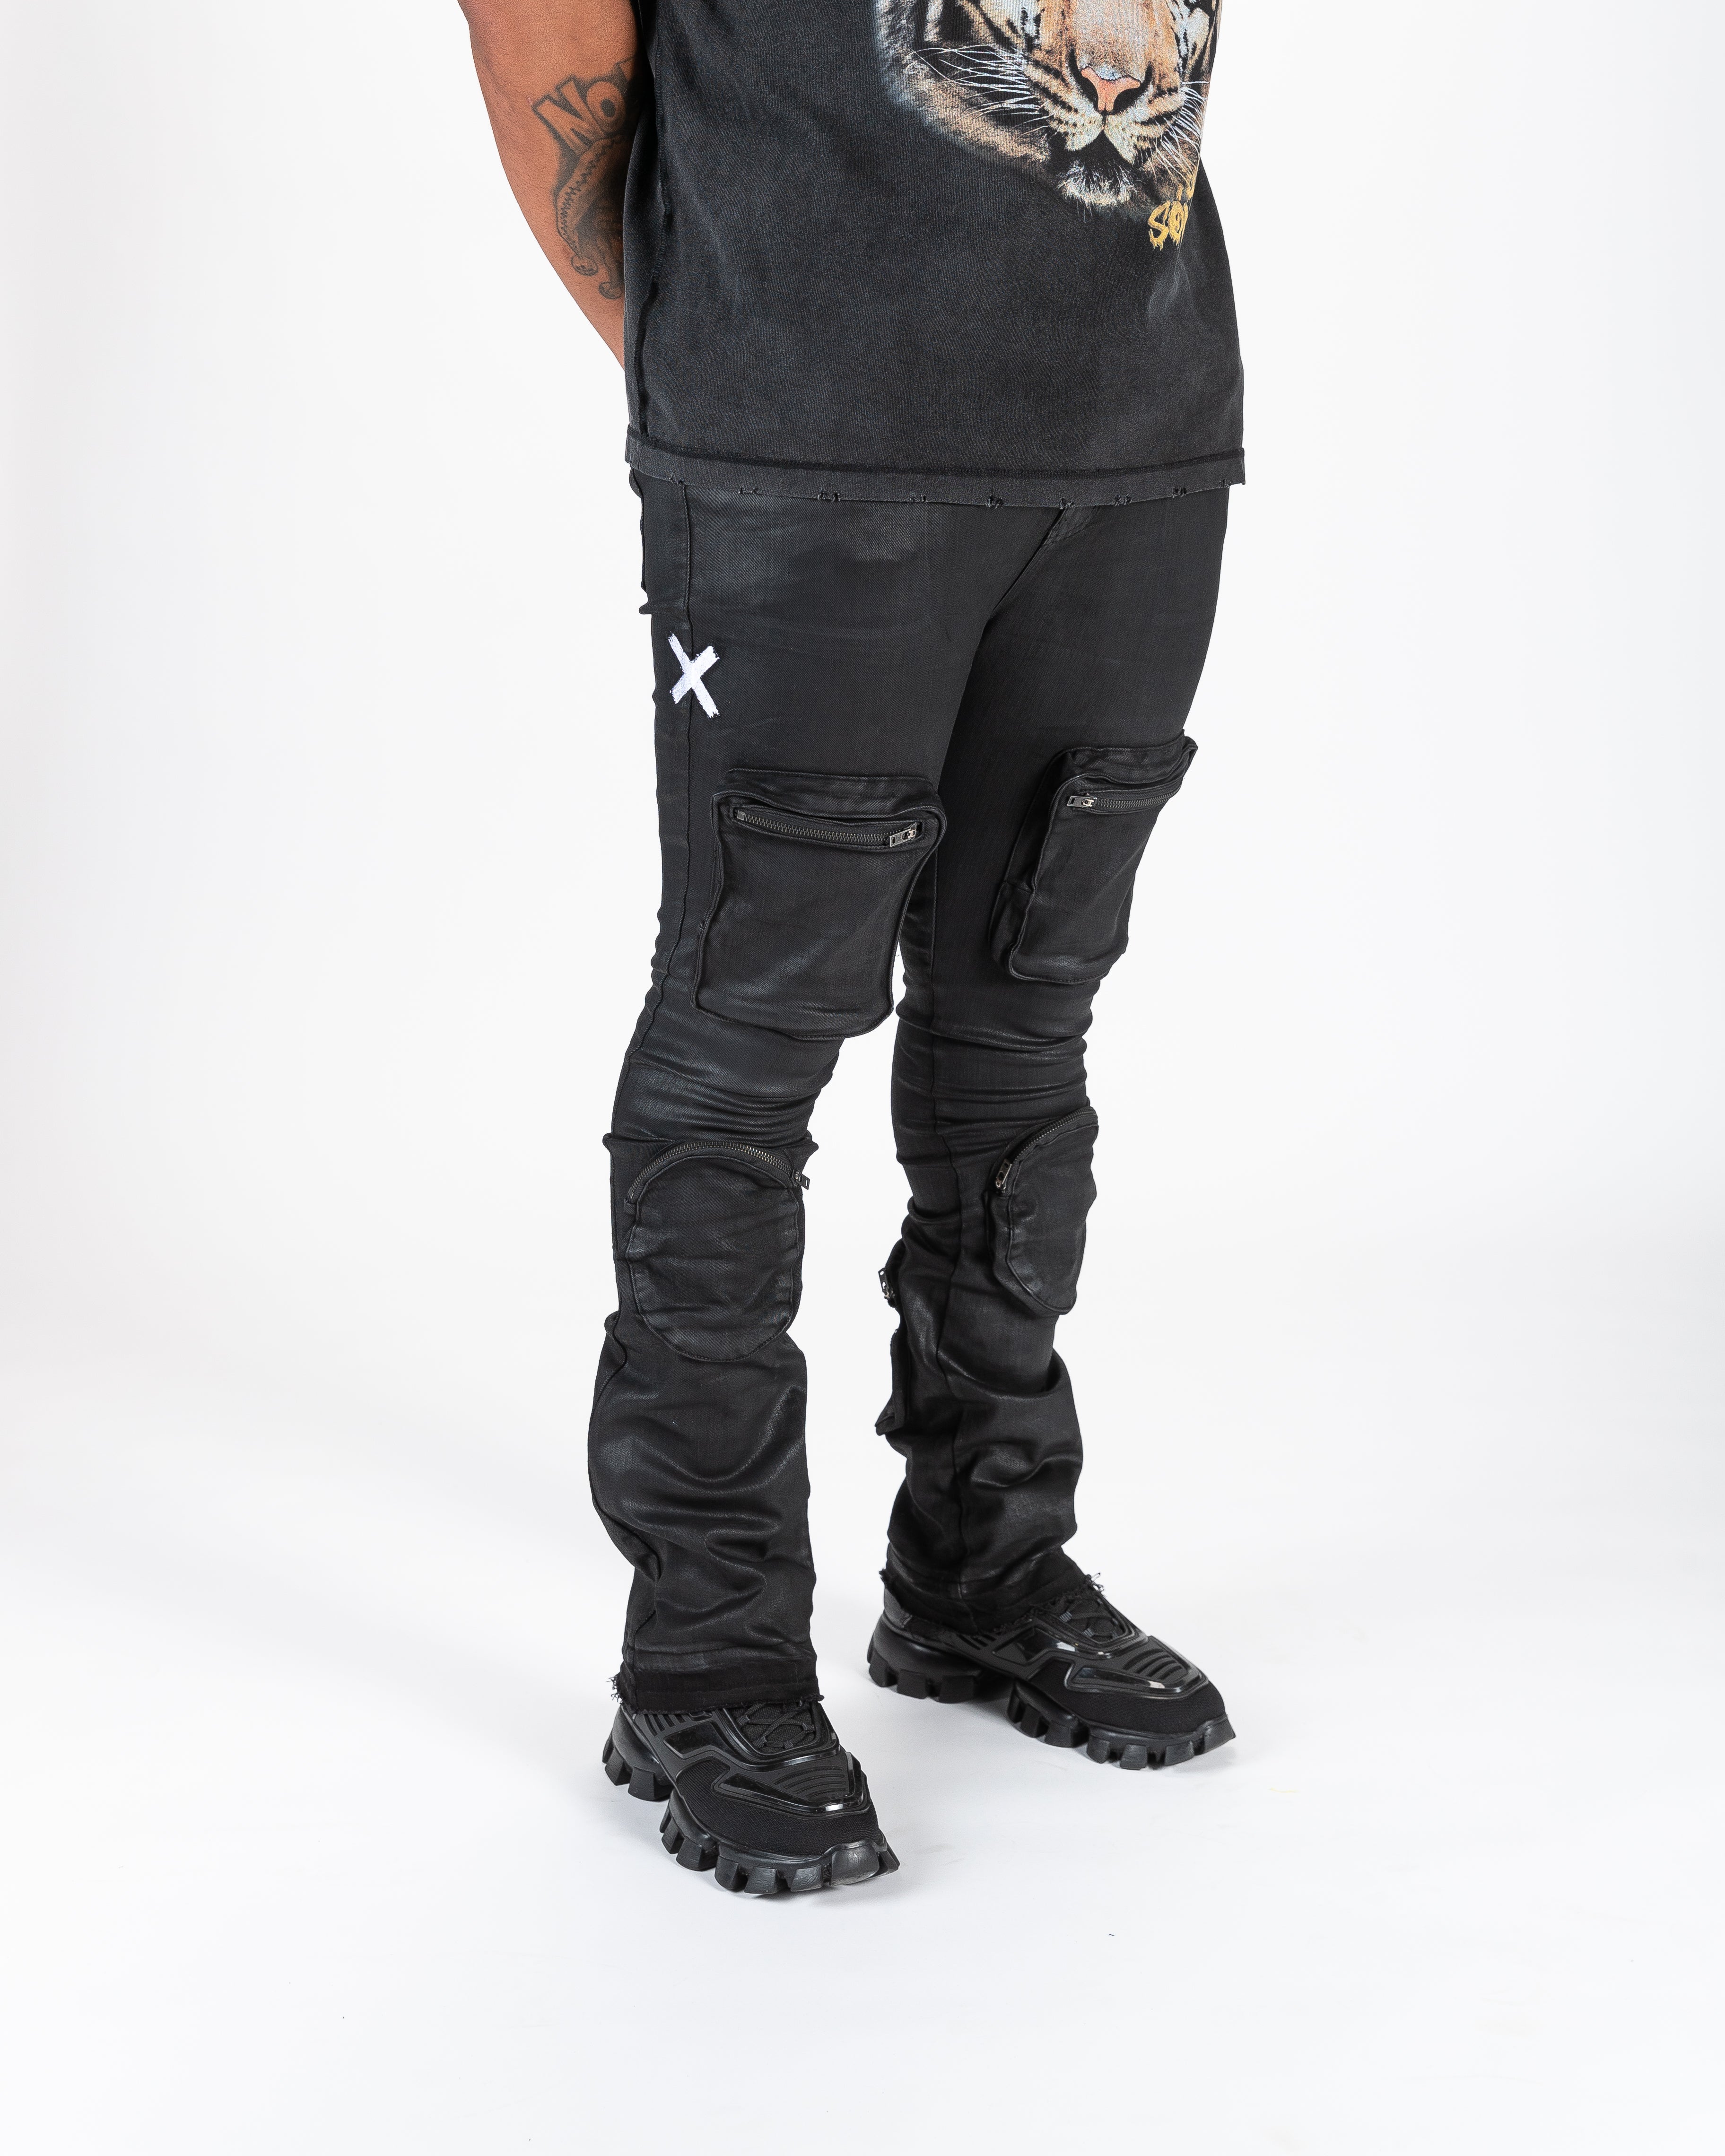 DiZNEW Streetwear jeans mens distressed hip| Alibaba.com